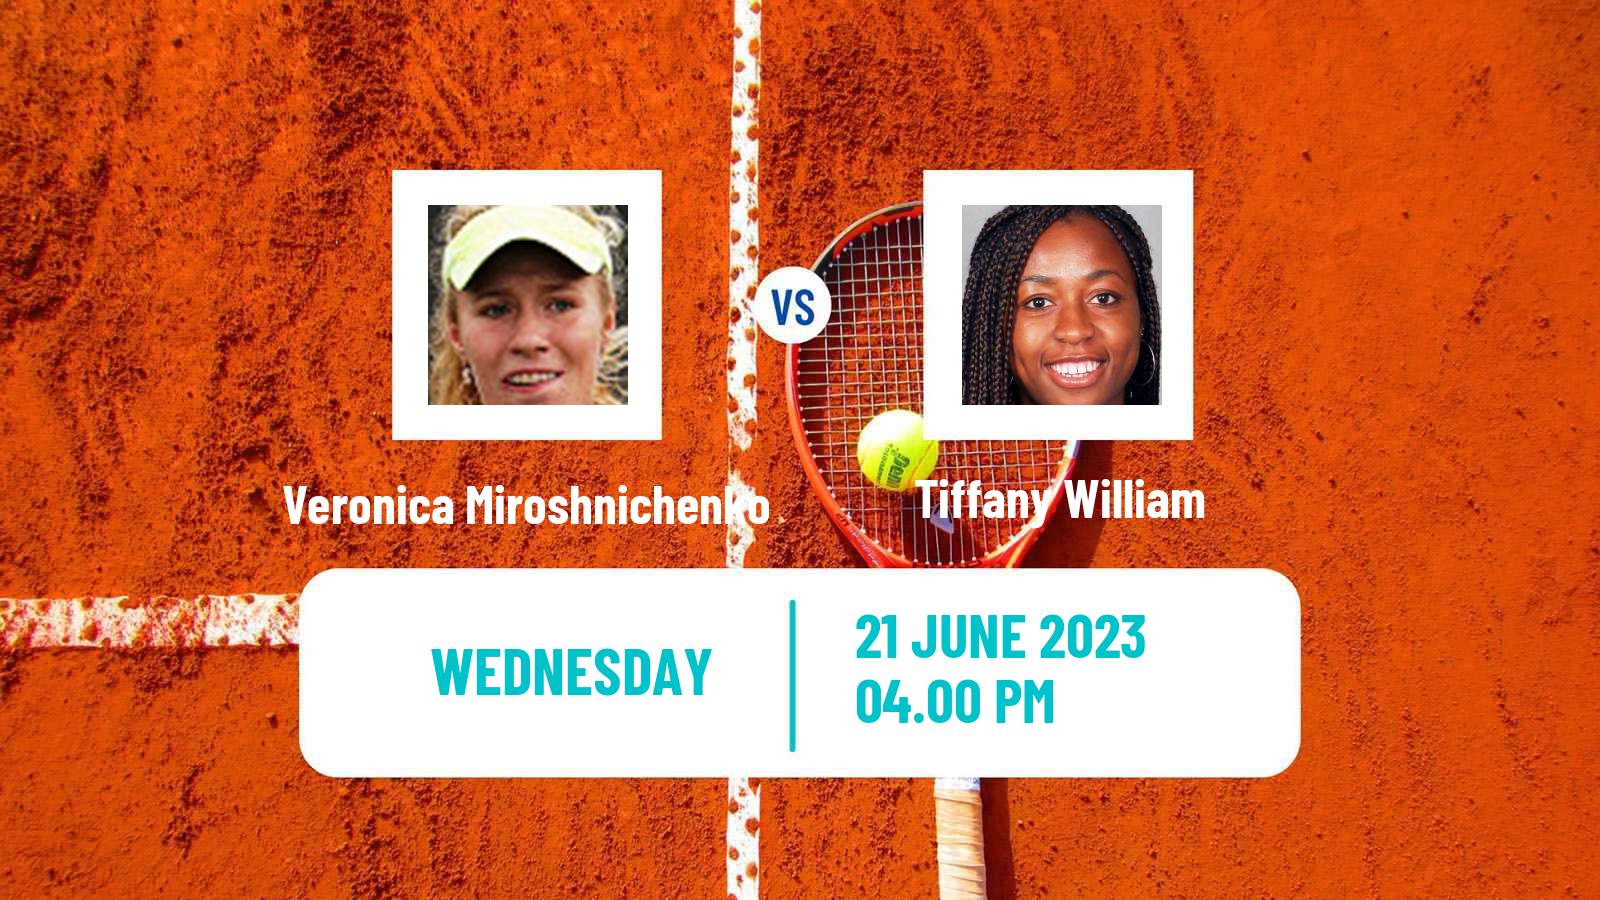 Tennis ITF W25 Wichita 2 Women Veronica Miroshnichenko - Tiffany William